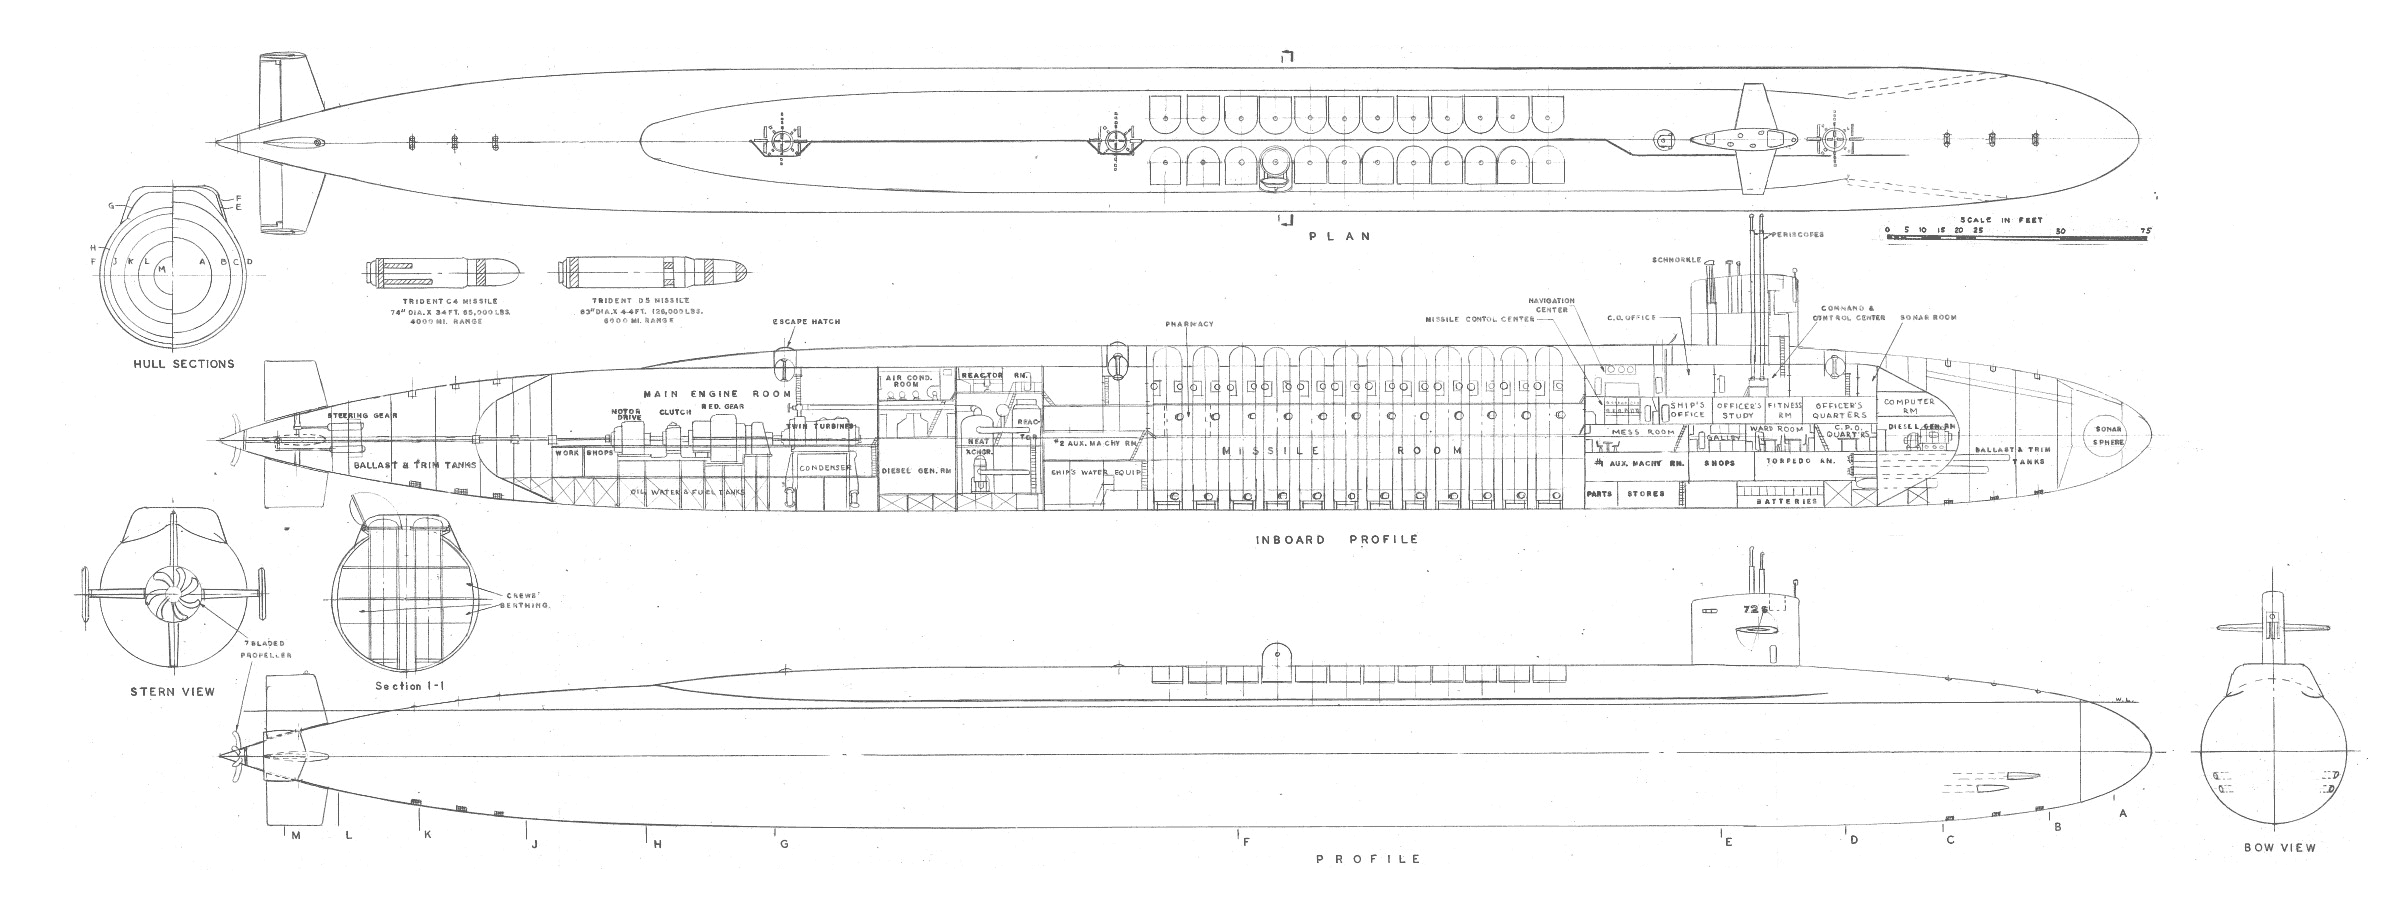 Ohio-class submarine blueprint